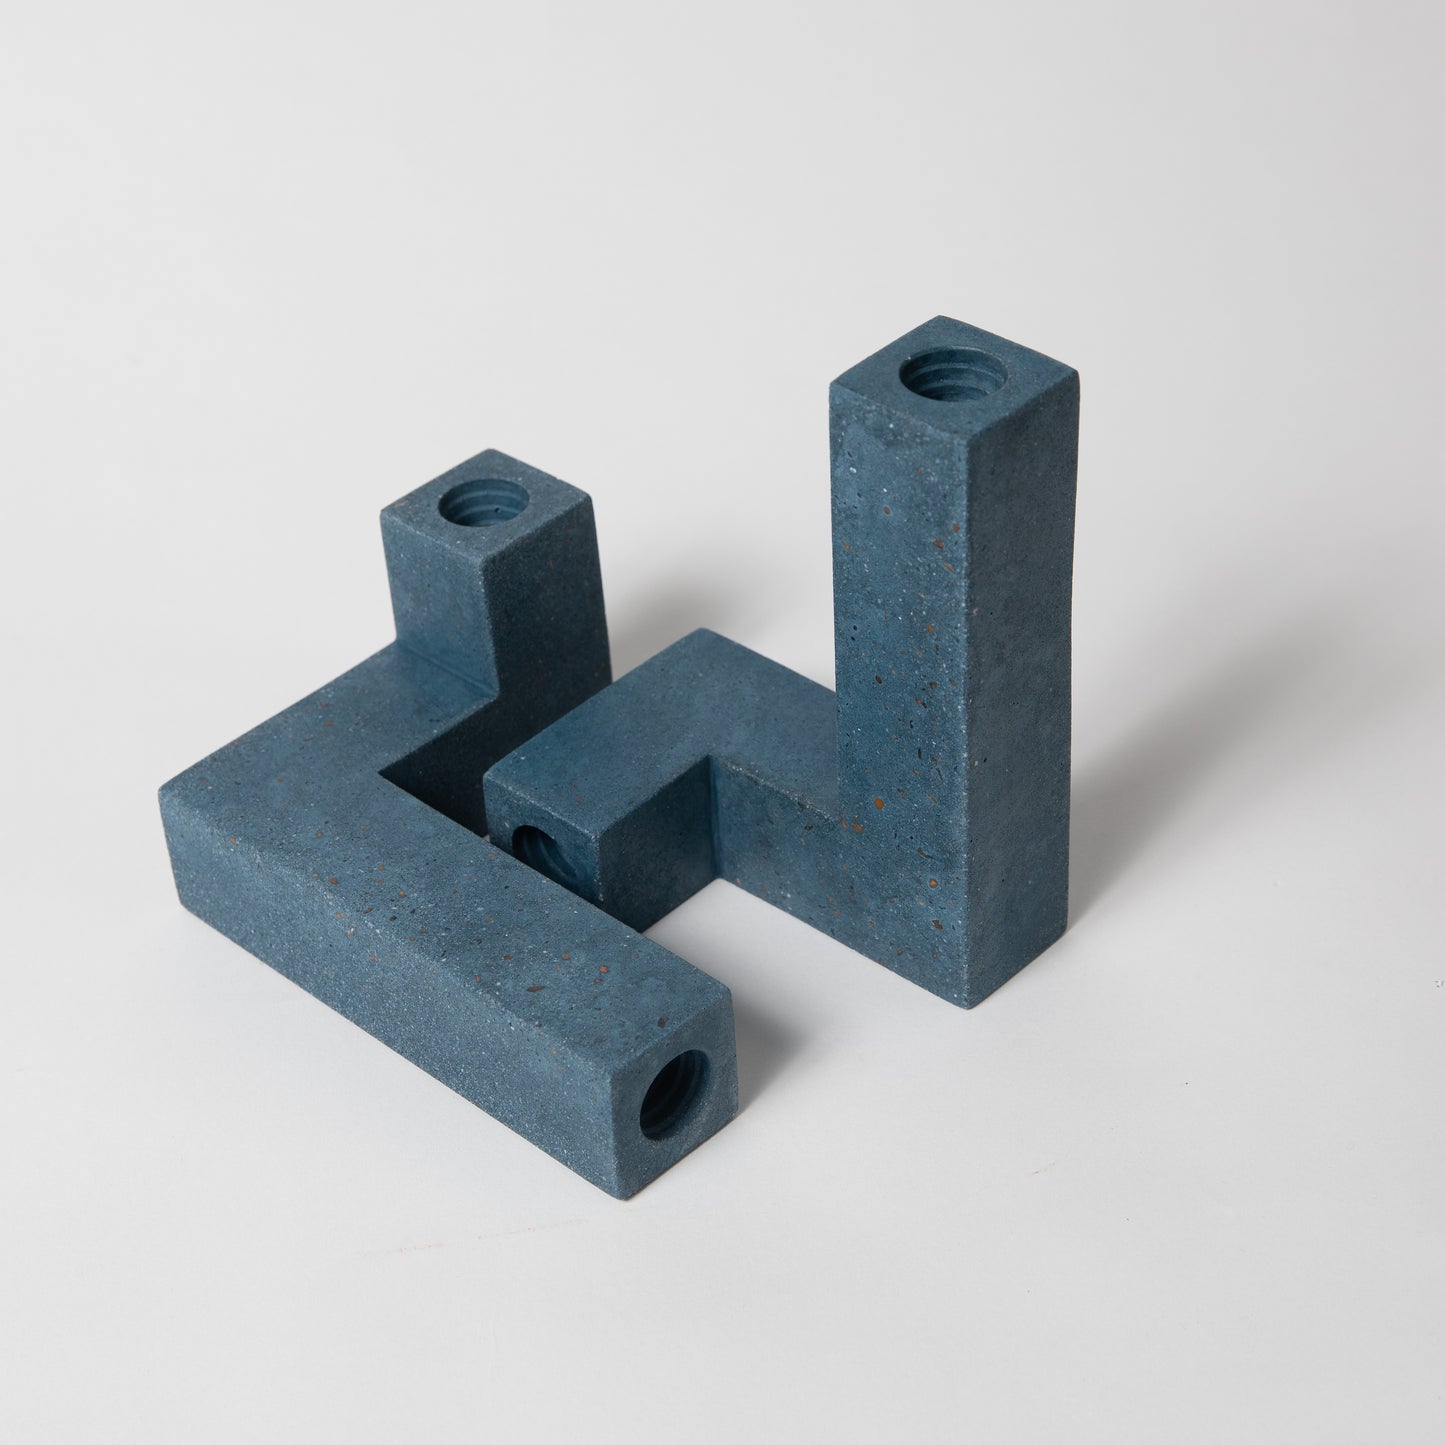 Concrete candlestick holder, set of 2 in cobalt blue terrazzo.